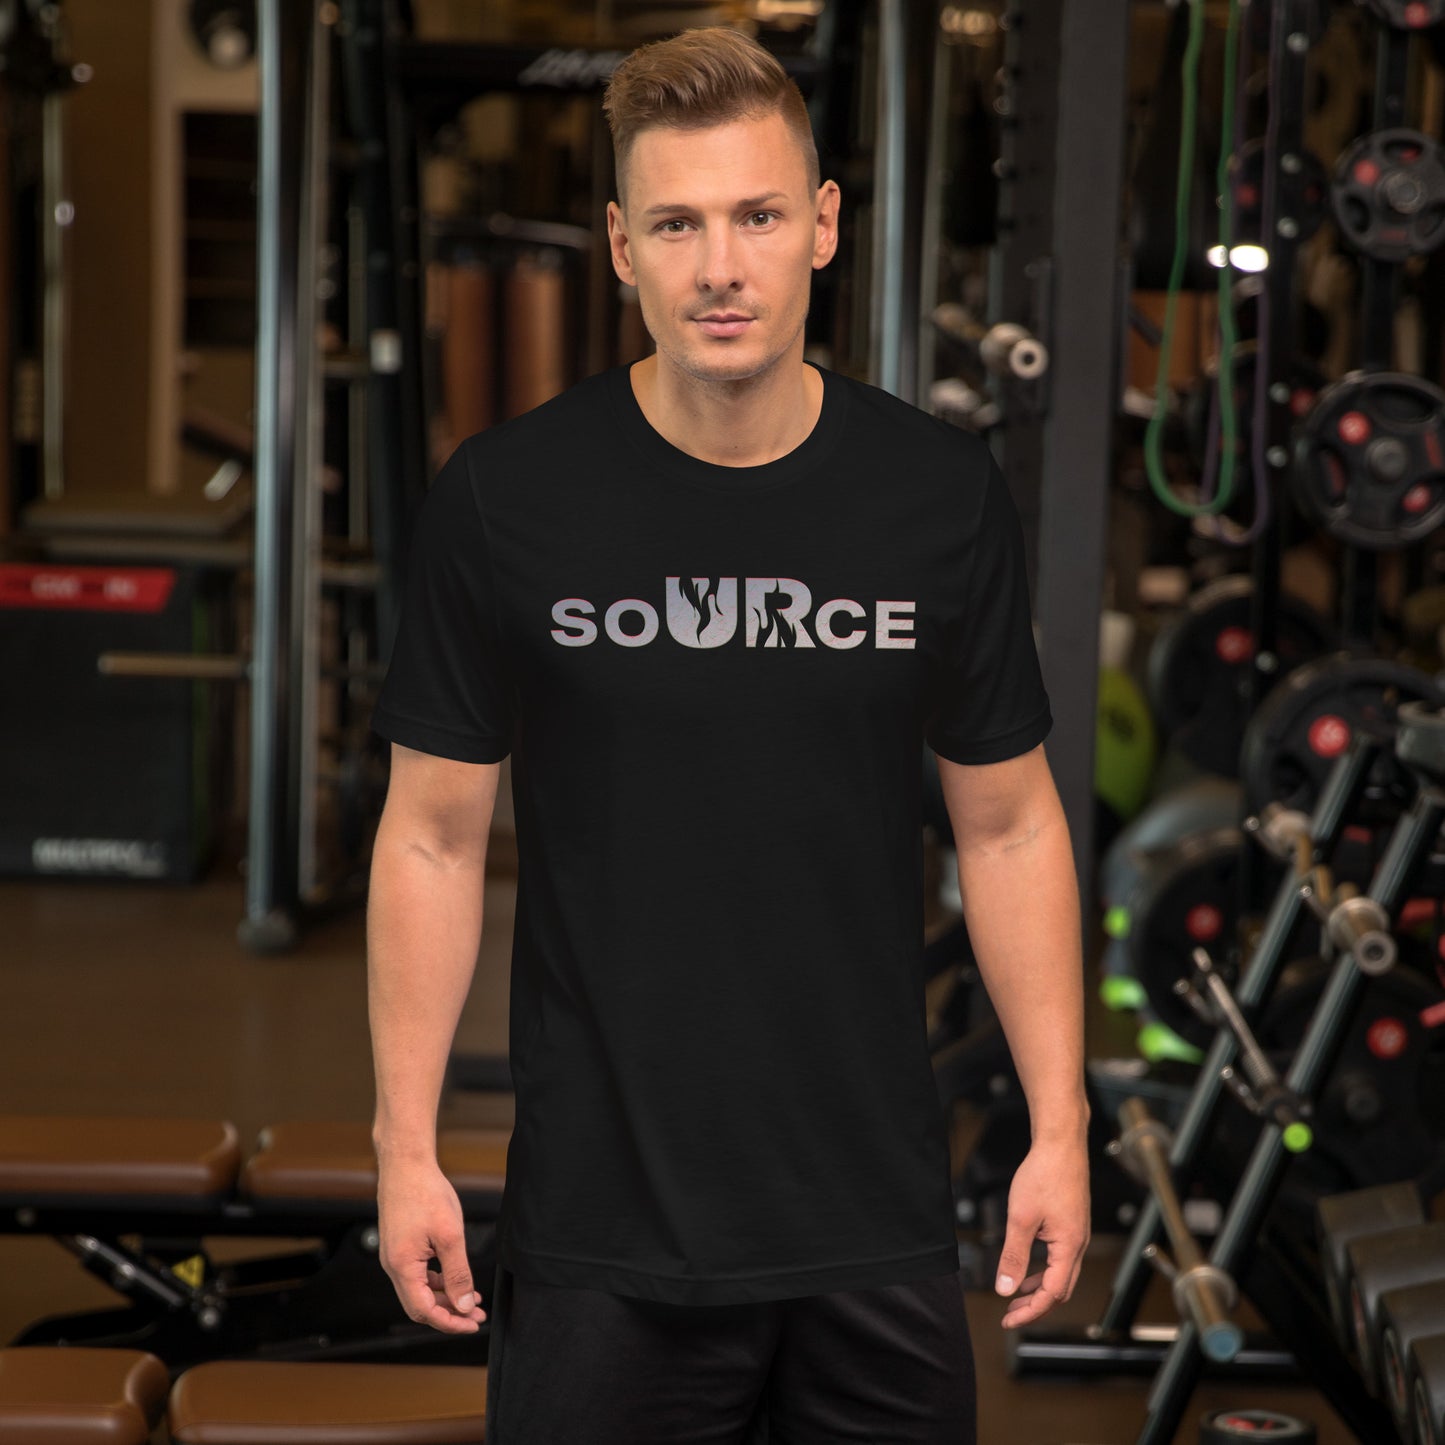 soURce - Unisex t-shirt